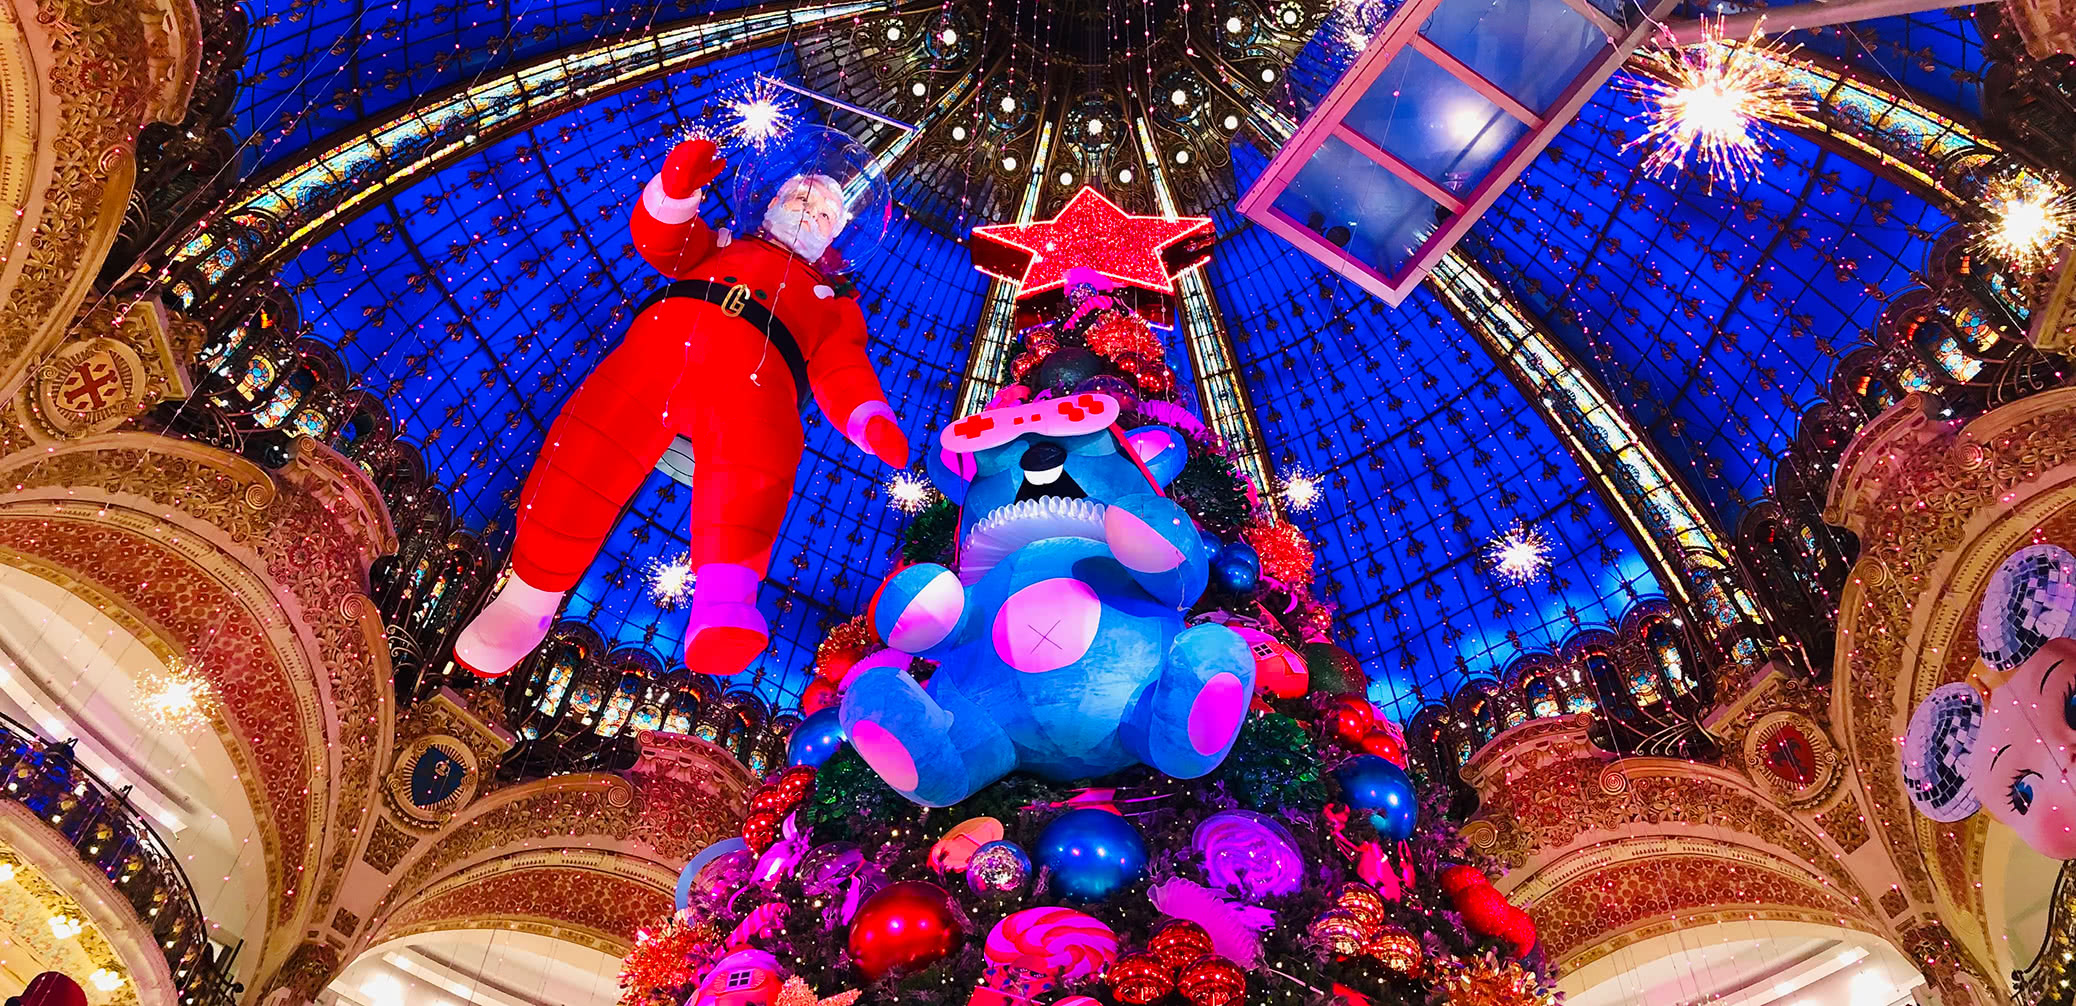 10 Best Christmas Light Displays In Paris